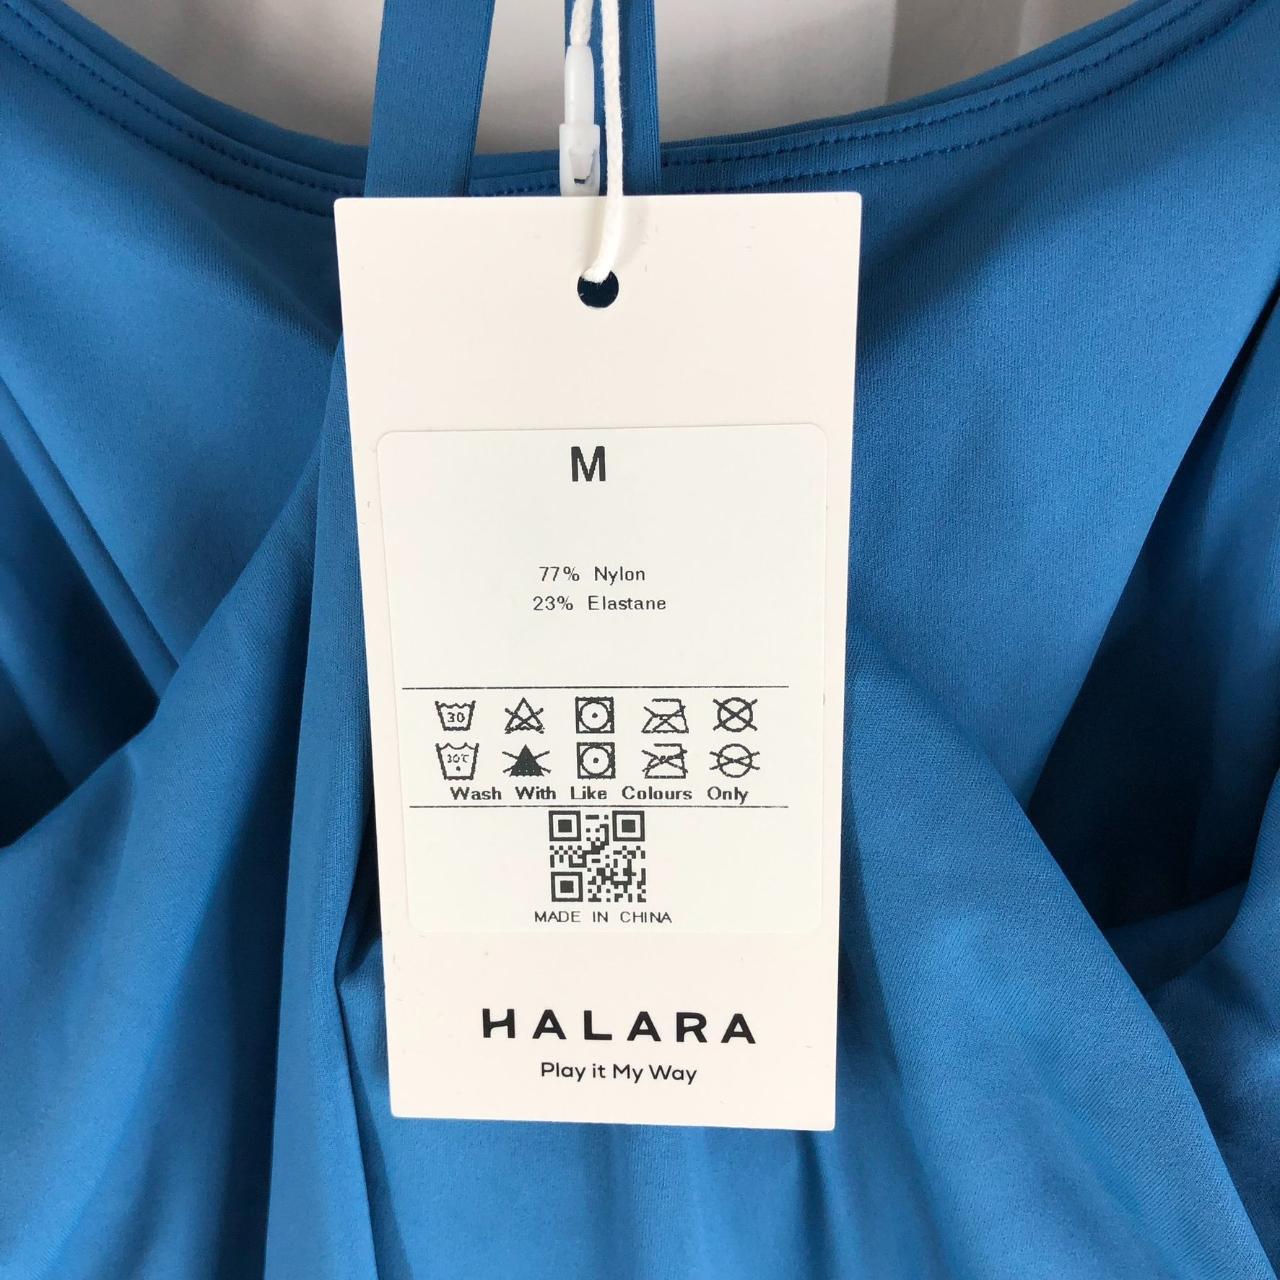 Halara Everyday Cloudful Fabric Backless 2-in-1 - Depop